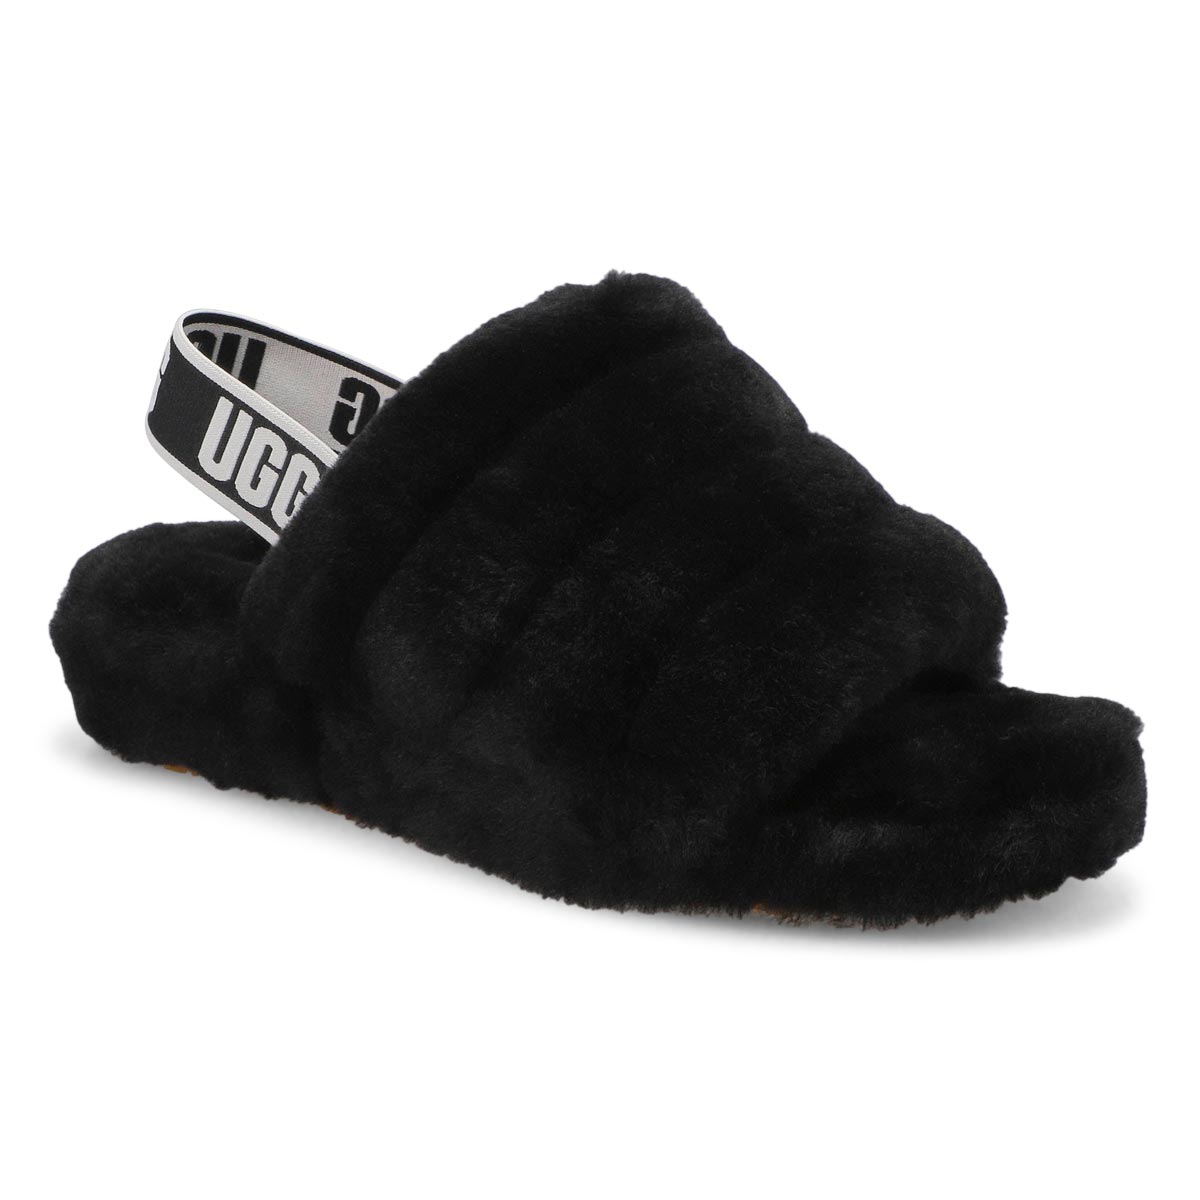 ugg slippers 7.5